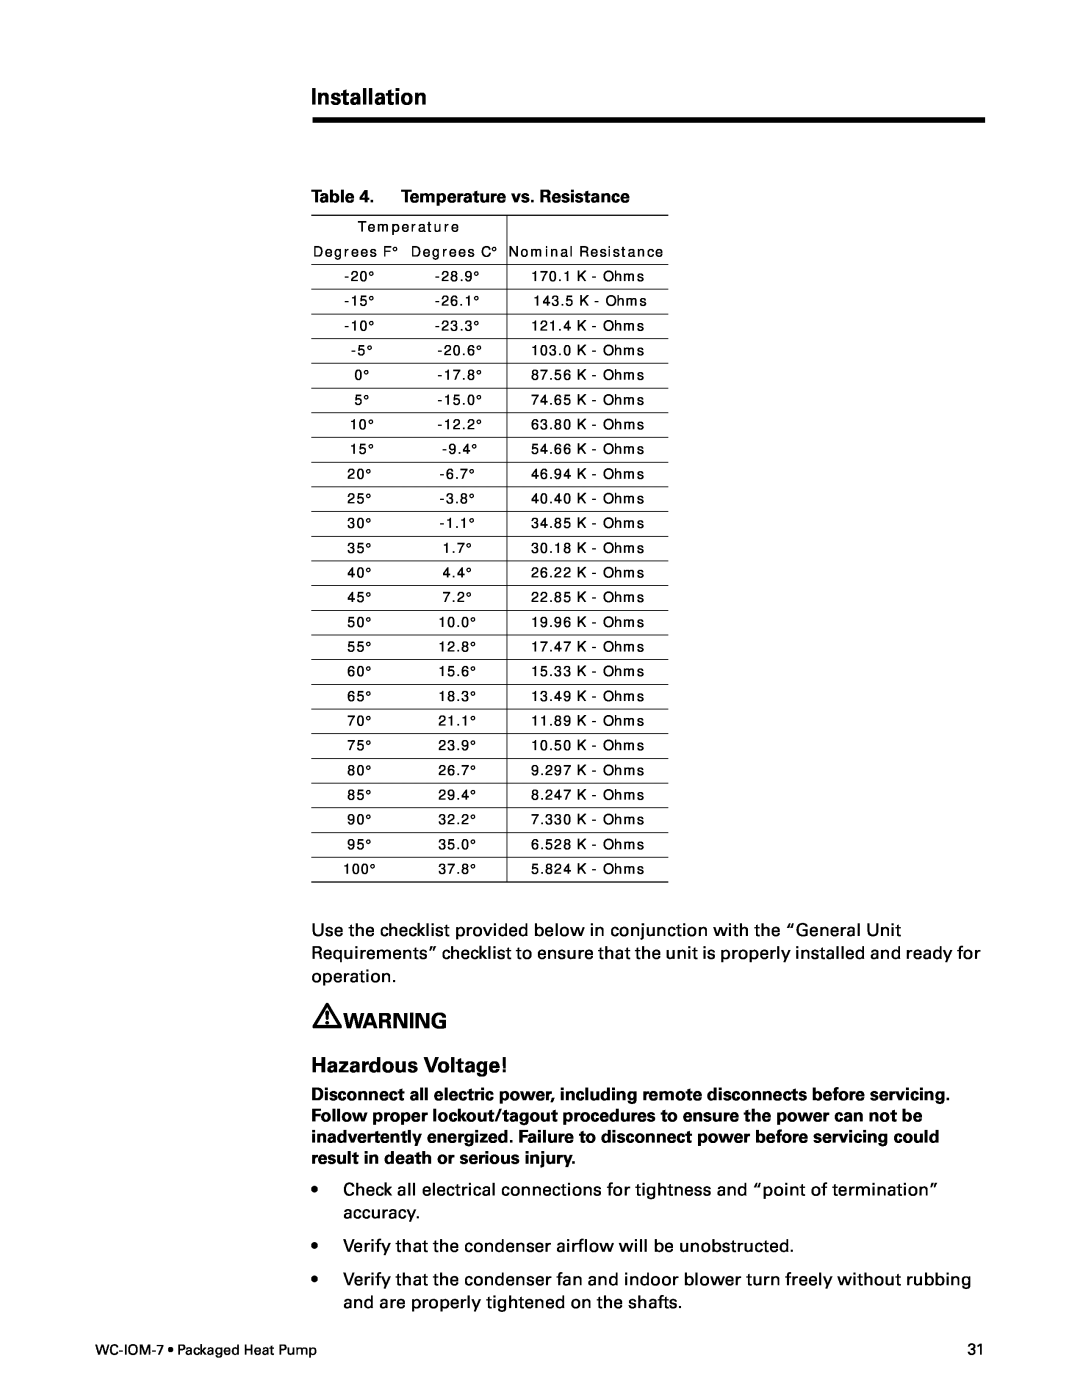 Trane WC-IOM-7 manual Temperature vs. Resistance, Installation, Hazardous Voltage, Degrees F Degrees C Nominal Resistance 